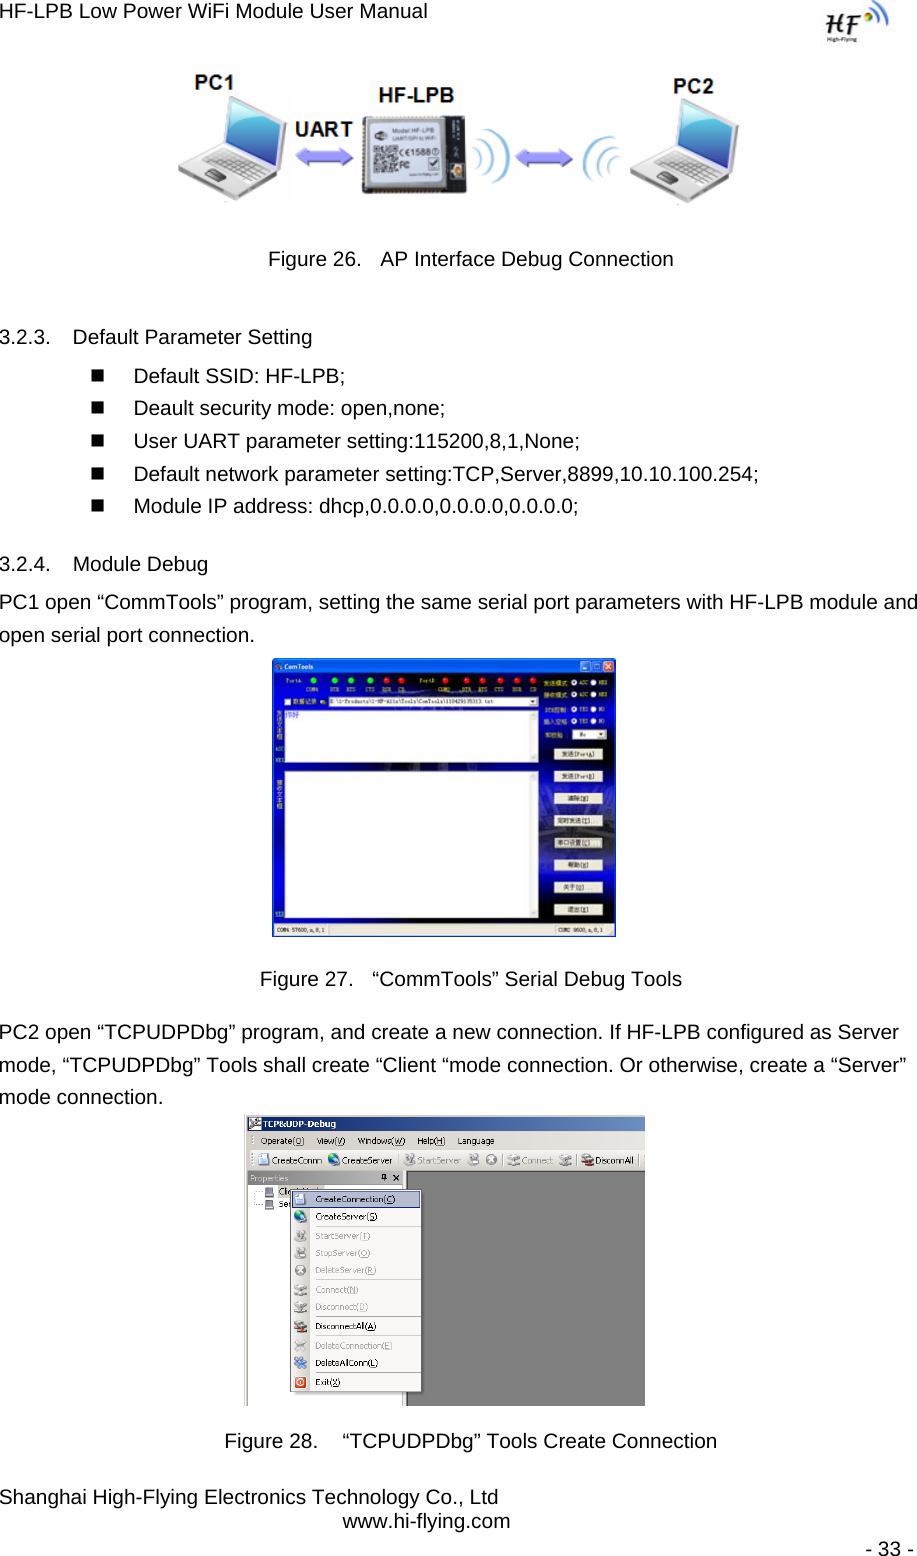 HF-LPB Low Power WiFi Module User Manual Shanghai High-Flying Electronics Technology Co., Ltd www.hi-flying.com   - 33 -                 Figure 26.  AP Interface Debug Connection 3.2.3.  Default Parameter Setting   Default SSID: HF-LPB;   Deault security mode: open,none;   User UART parameter setting:115200,8,1,None;   Default network parameter setting:TCP,Server,8899,10.10.100.254;   Module IP address: dhcp,0.0.0.0,0.0.0.0,0.0.0.0; 3.2.4. Module Debug PC1 open “CommTools” program, setting the same serial port parameters with HF-LPB module and open serial port connection.   Figure 27.  “CommTools” Serial Debug Tools PC2 open “TCPUDPDbg” program, and create a new connection. If HF-LPB configured as Server mode, “TCPUDPDbg” Tools shall create “Client “mode connection. Or otherwise, create a “Server” mode connection.    Figure 28.   “TCPUDPDbg” Tools Create Connection 